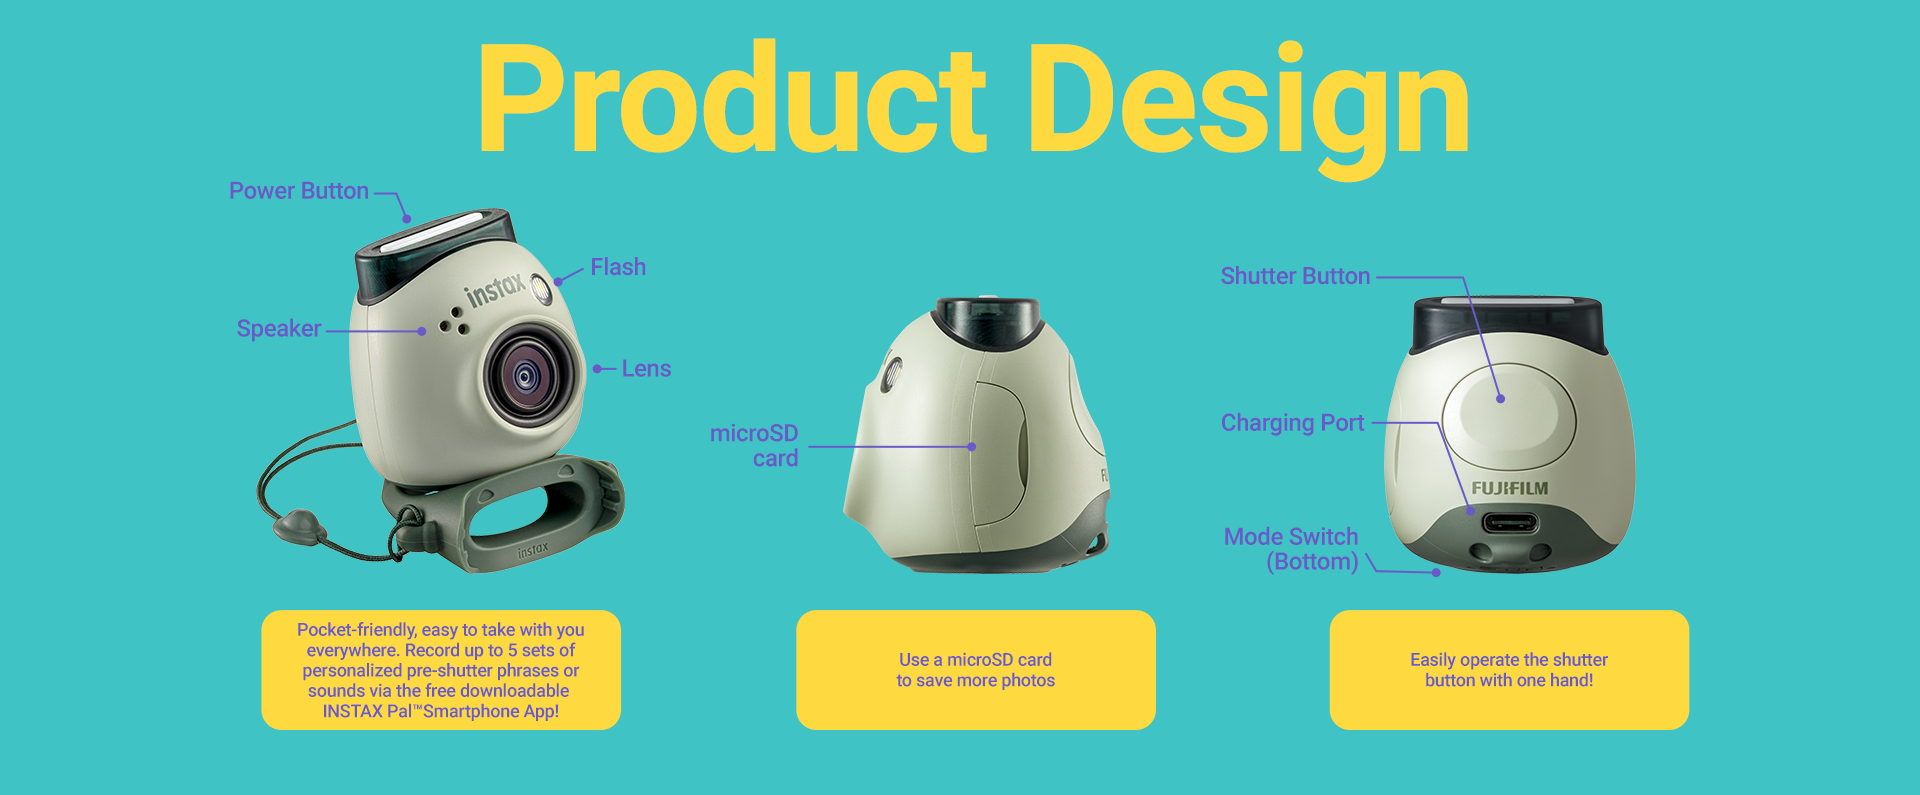 Instax Pal - Product Design Details